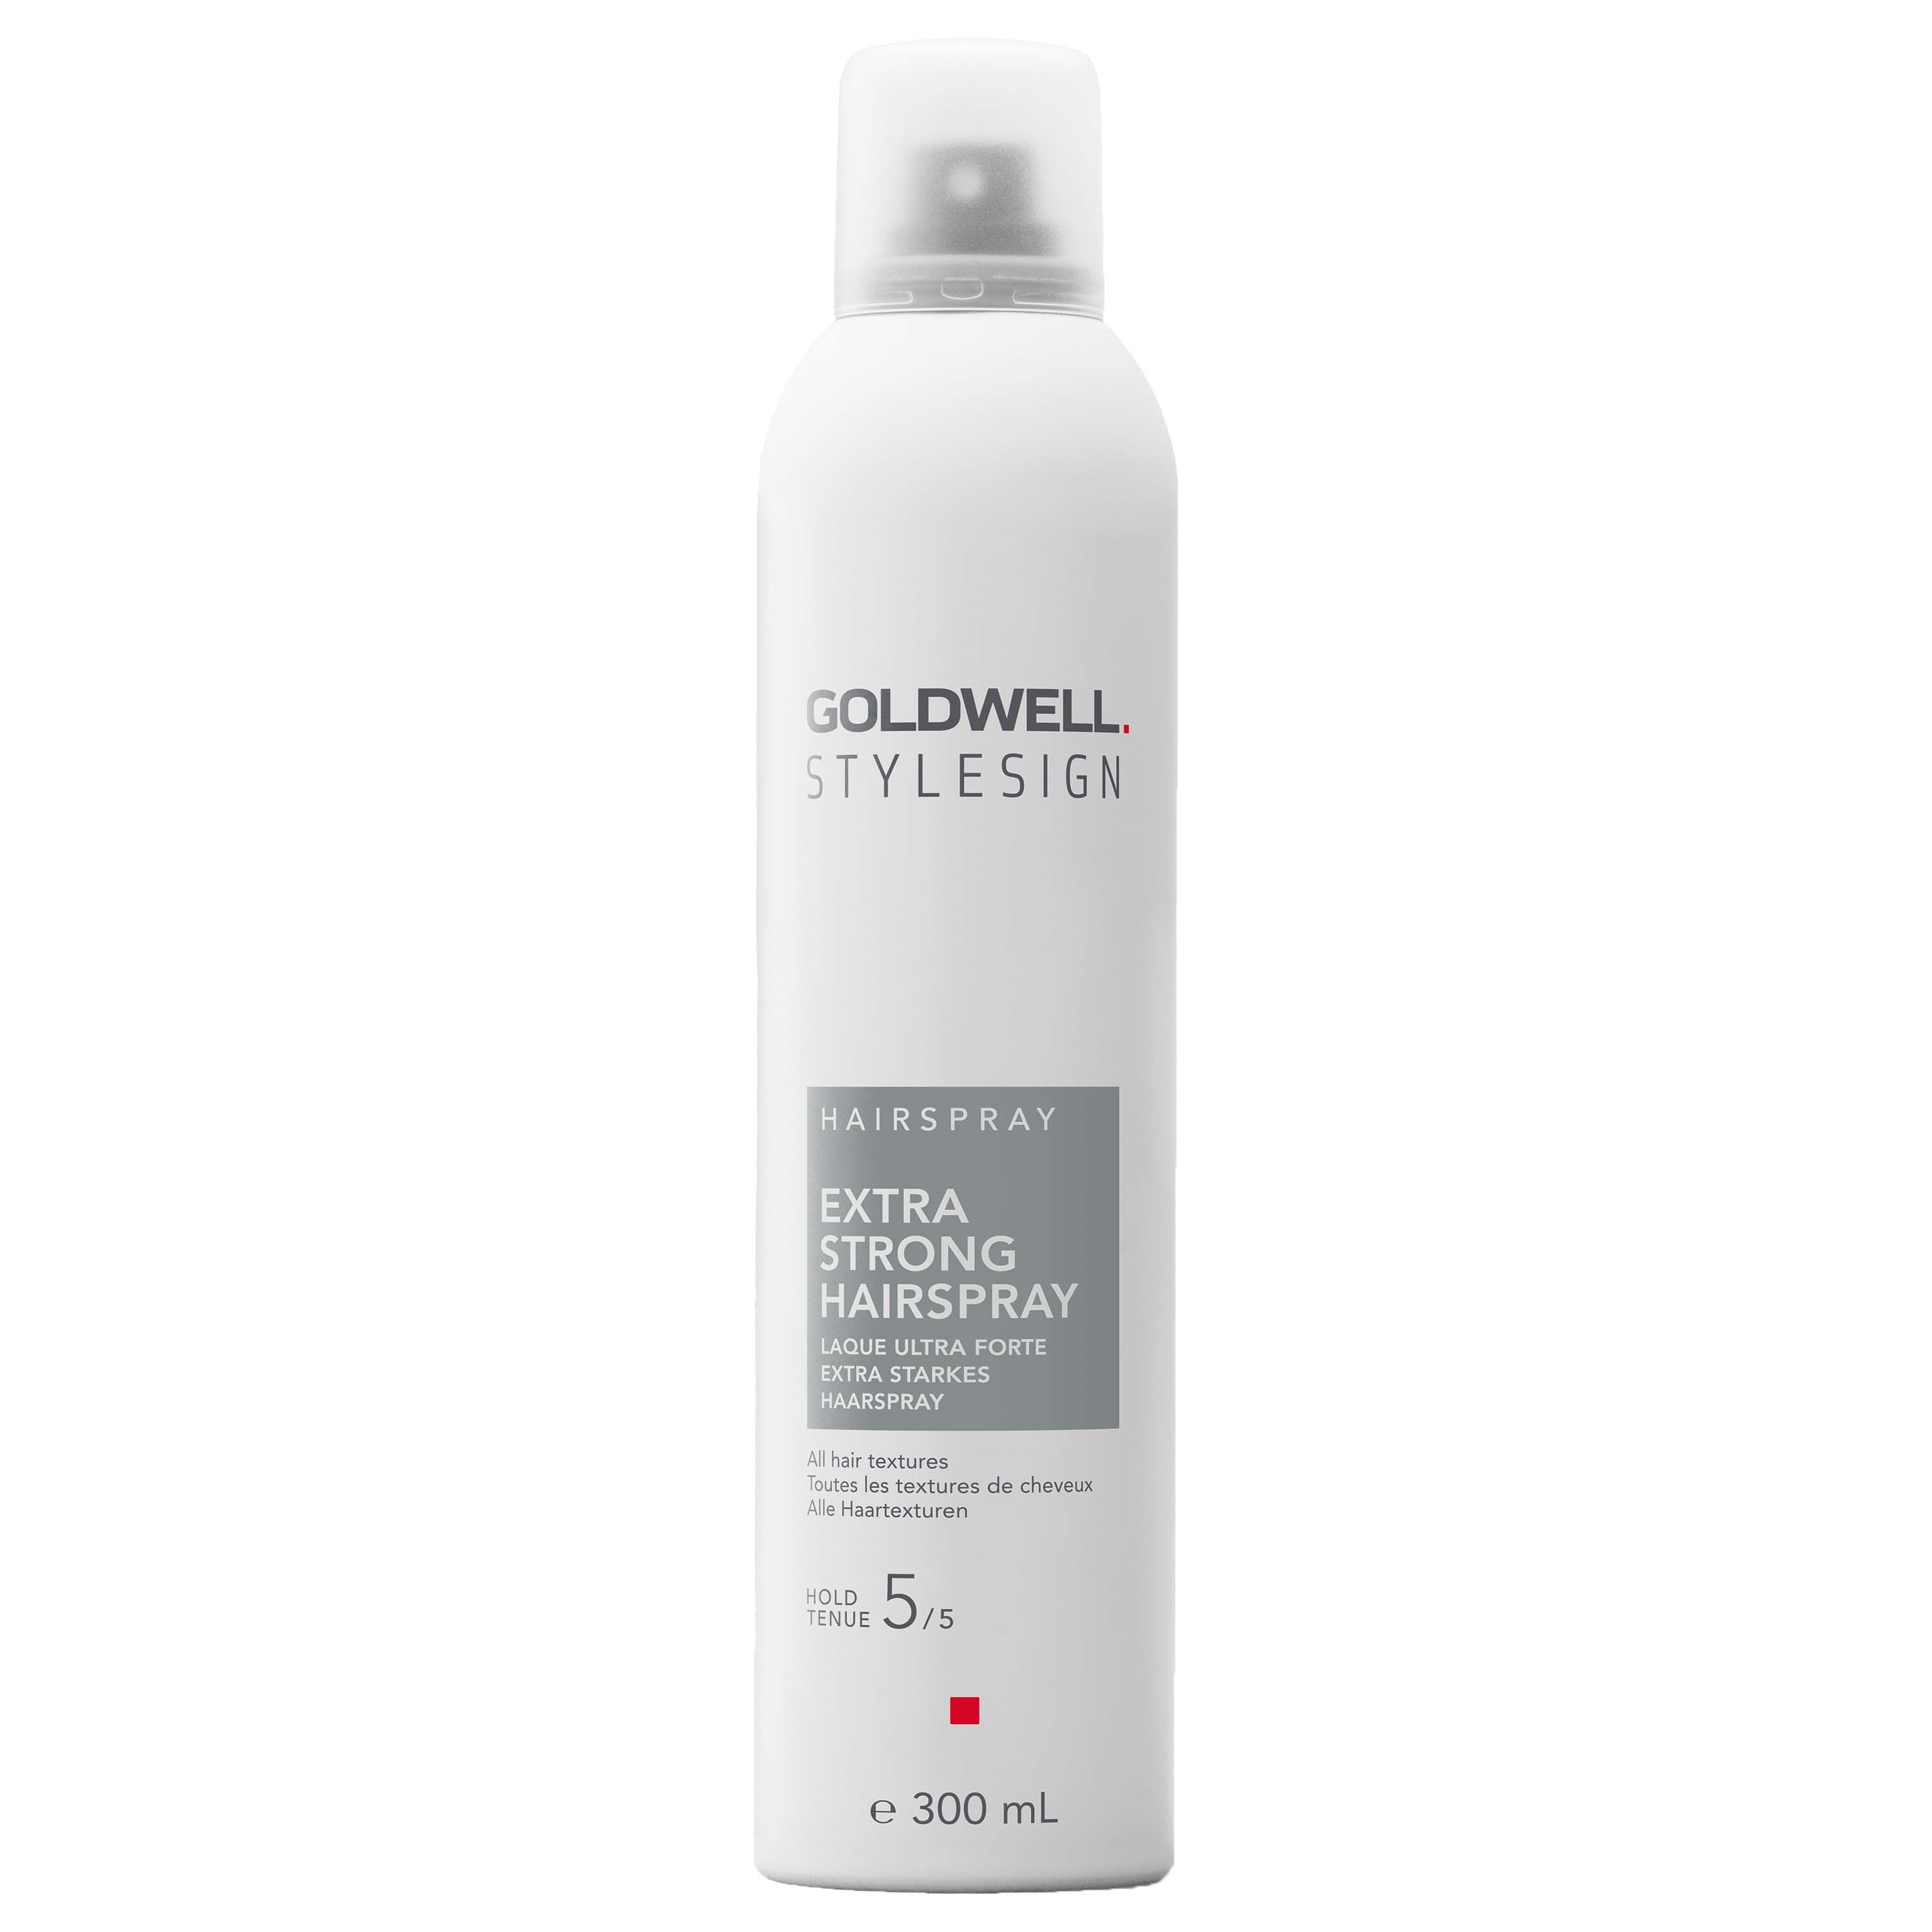 Läs mer om Goldwell StyleSign Hairspray Extra Strong Hairspray 300 ml